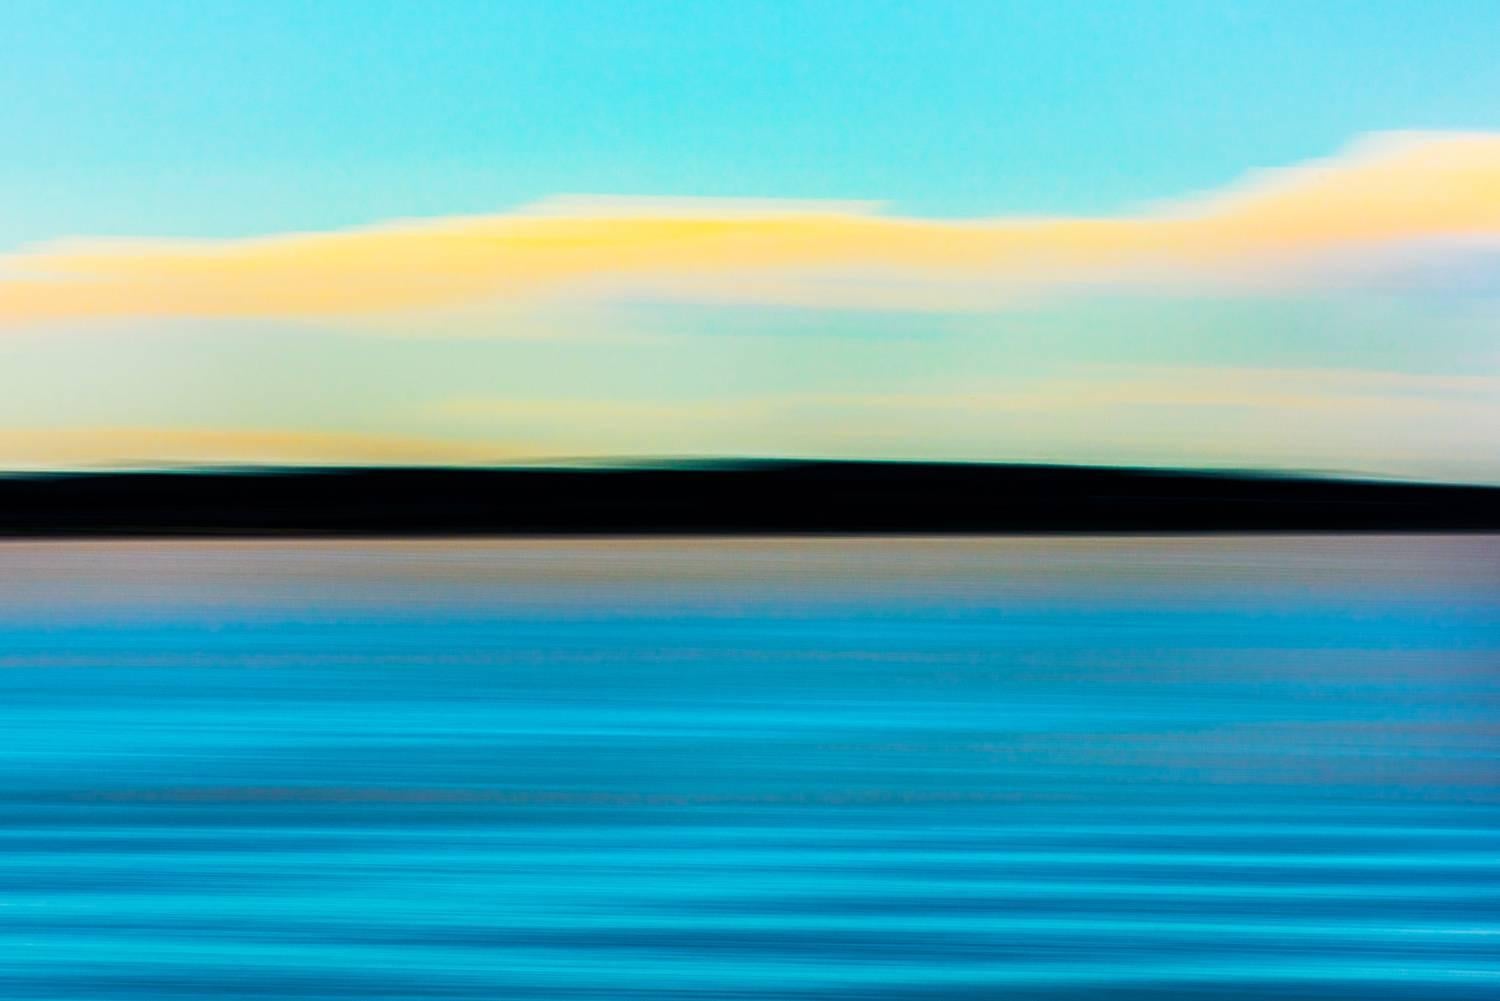 John Mazlish Landscape Photograph - Water, Land & Sky